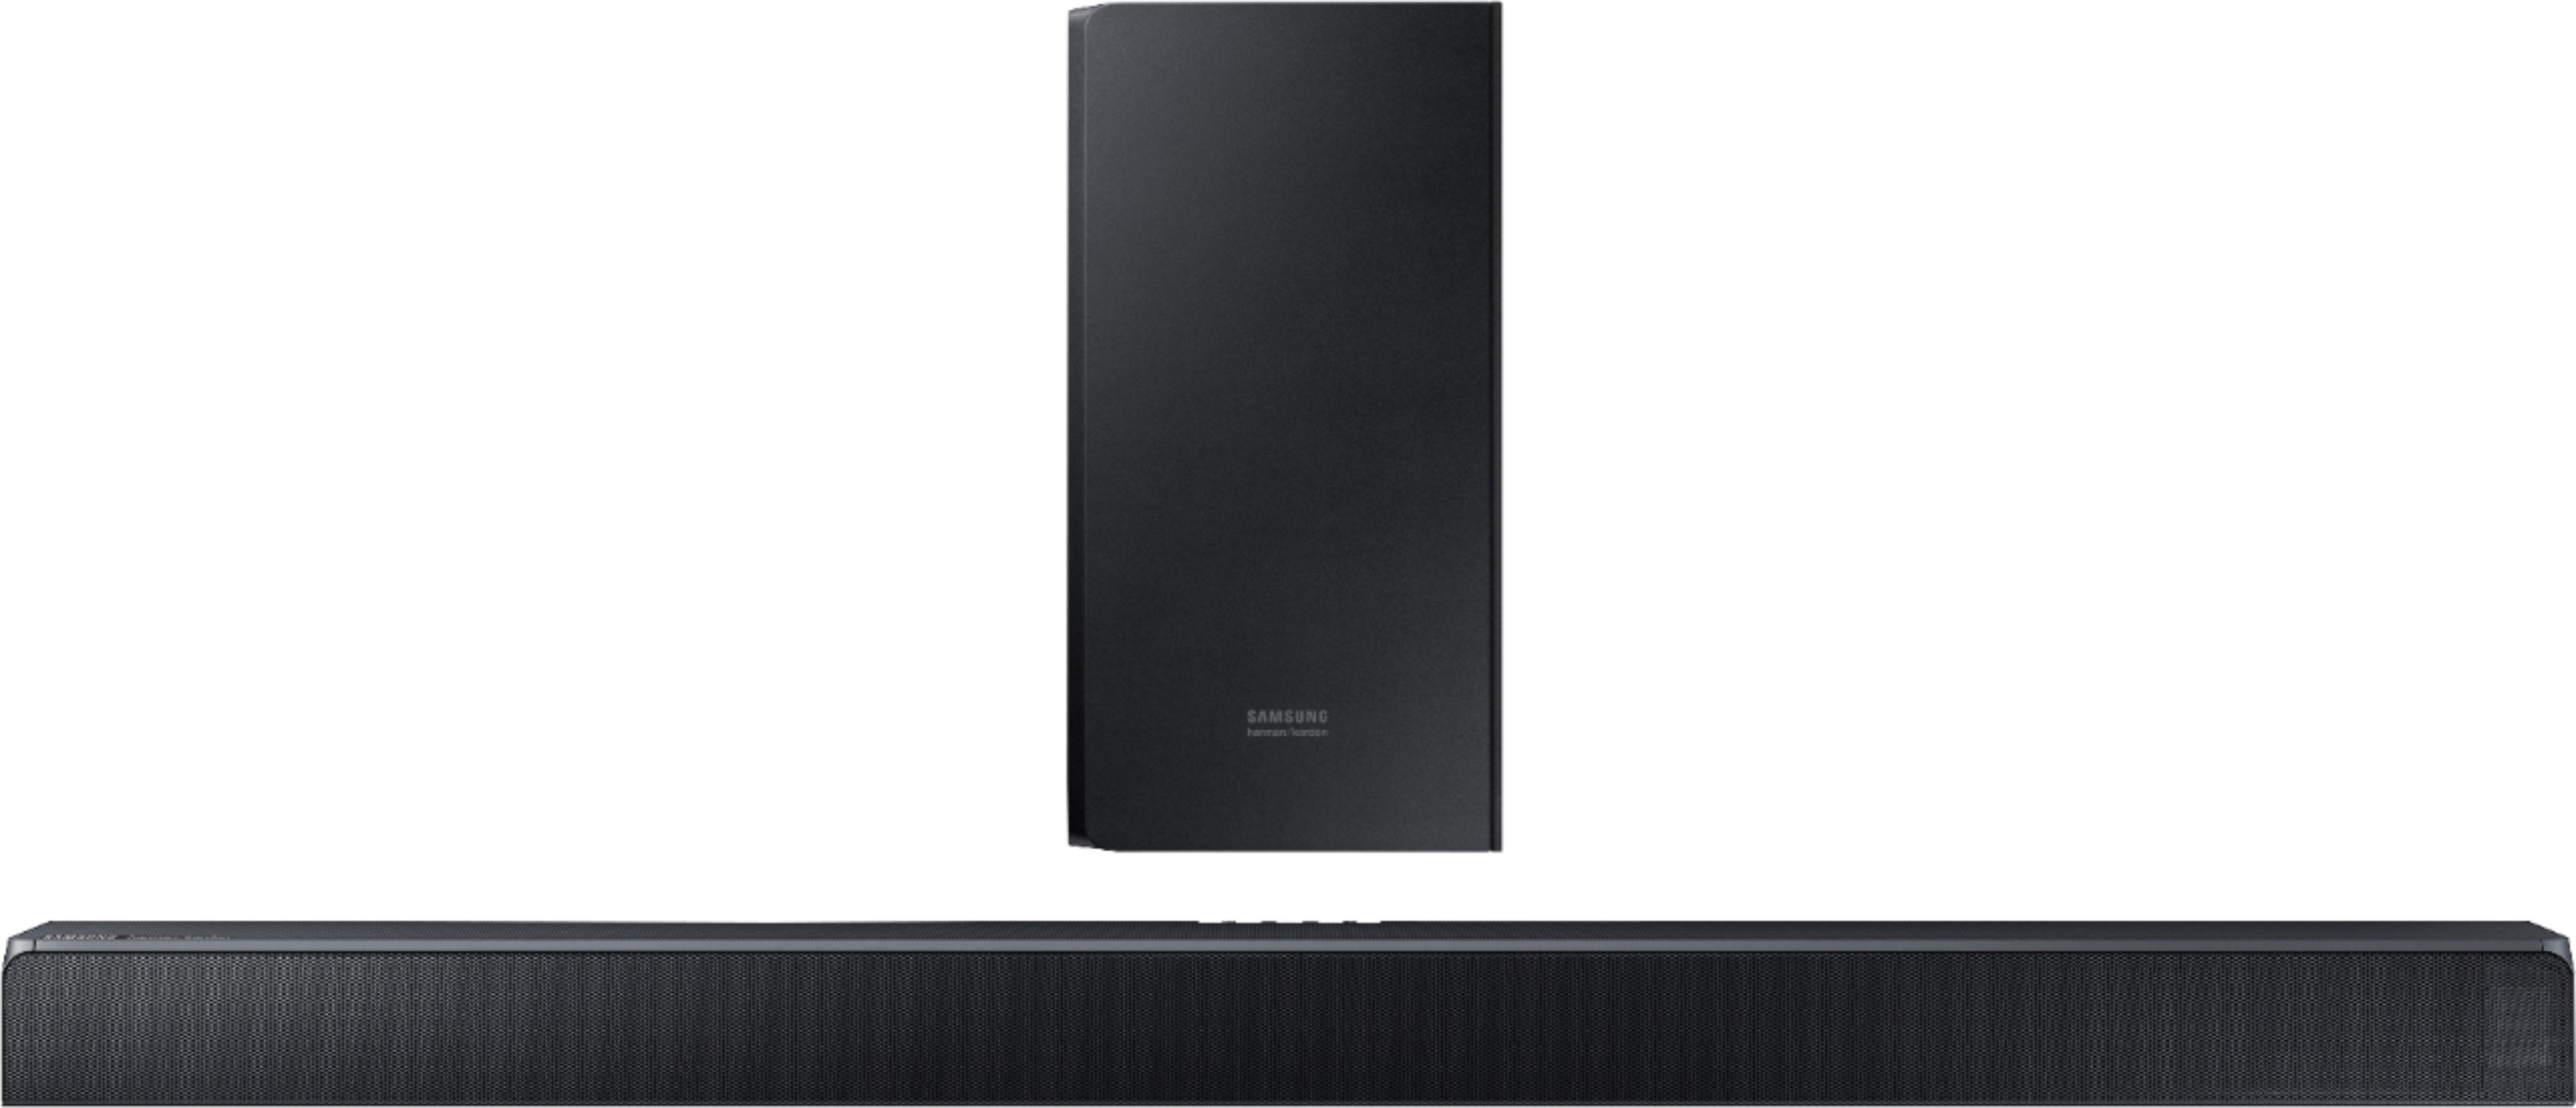 Best Buy: Samsung Harman Kardon with Dolby Atmos Black HW-N850/ZA